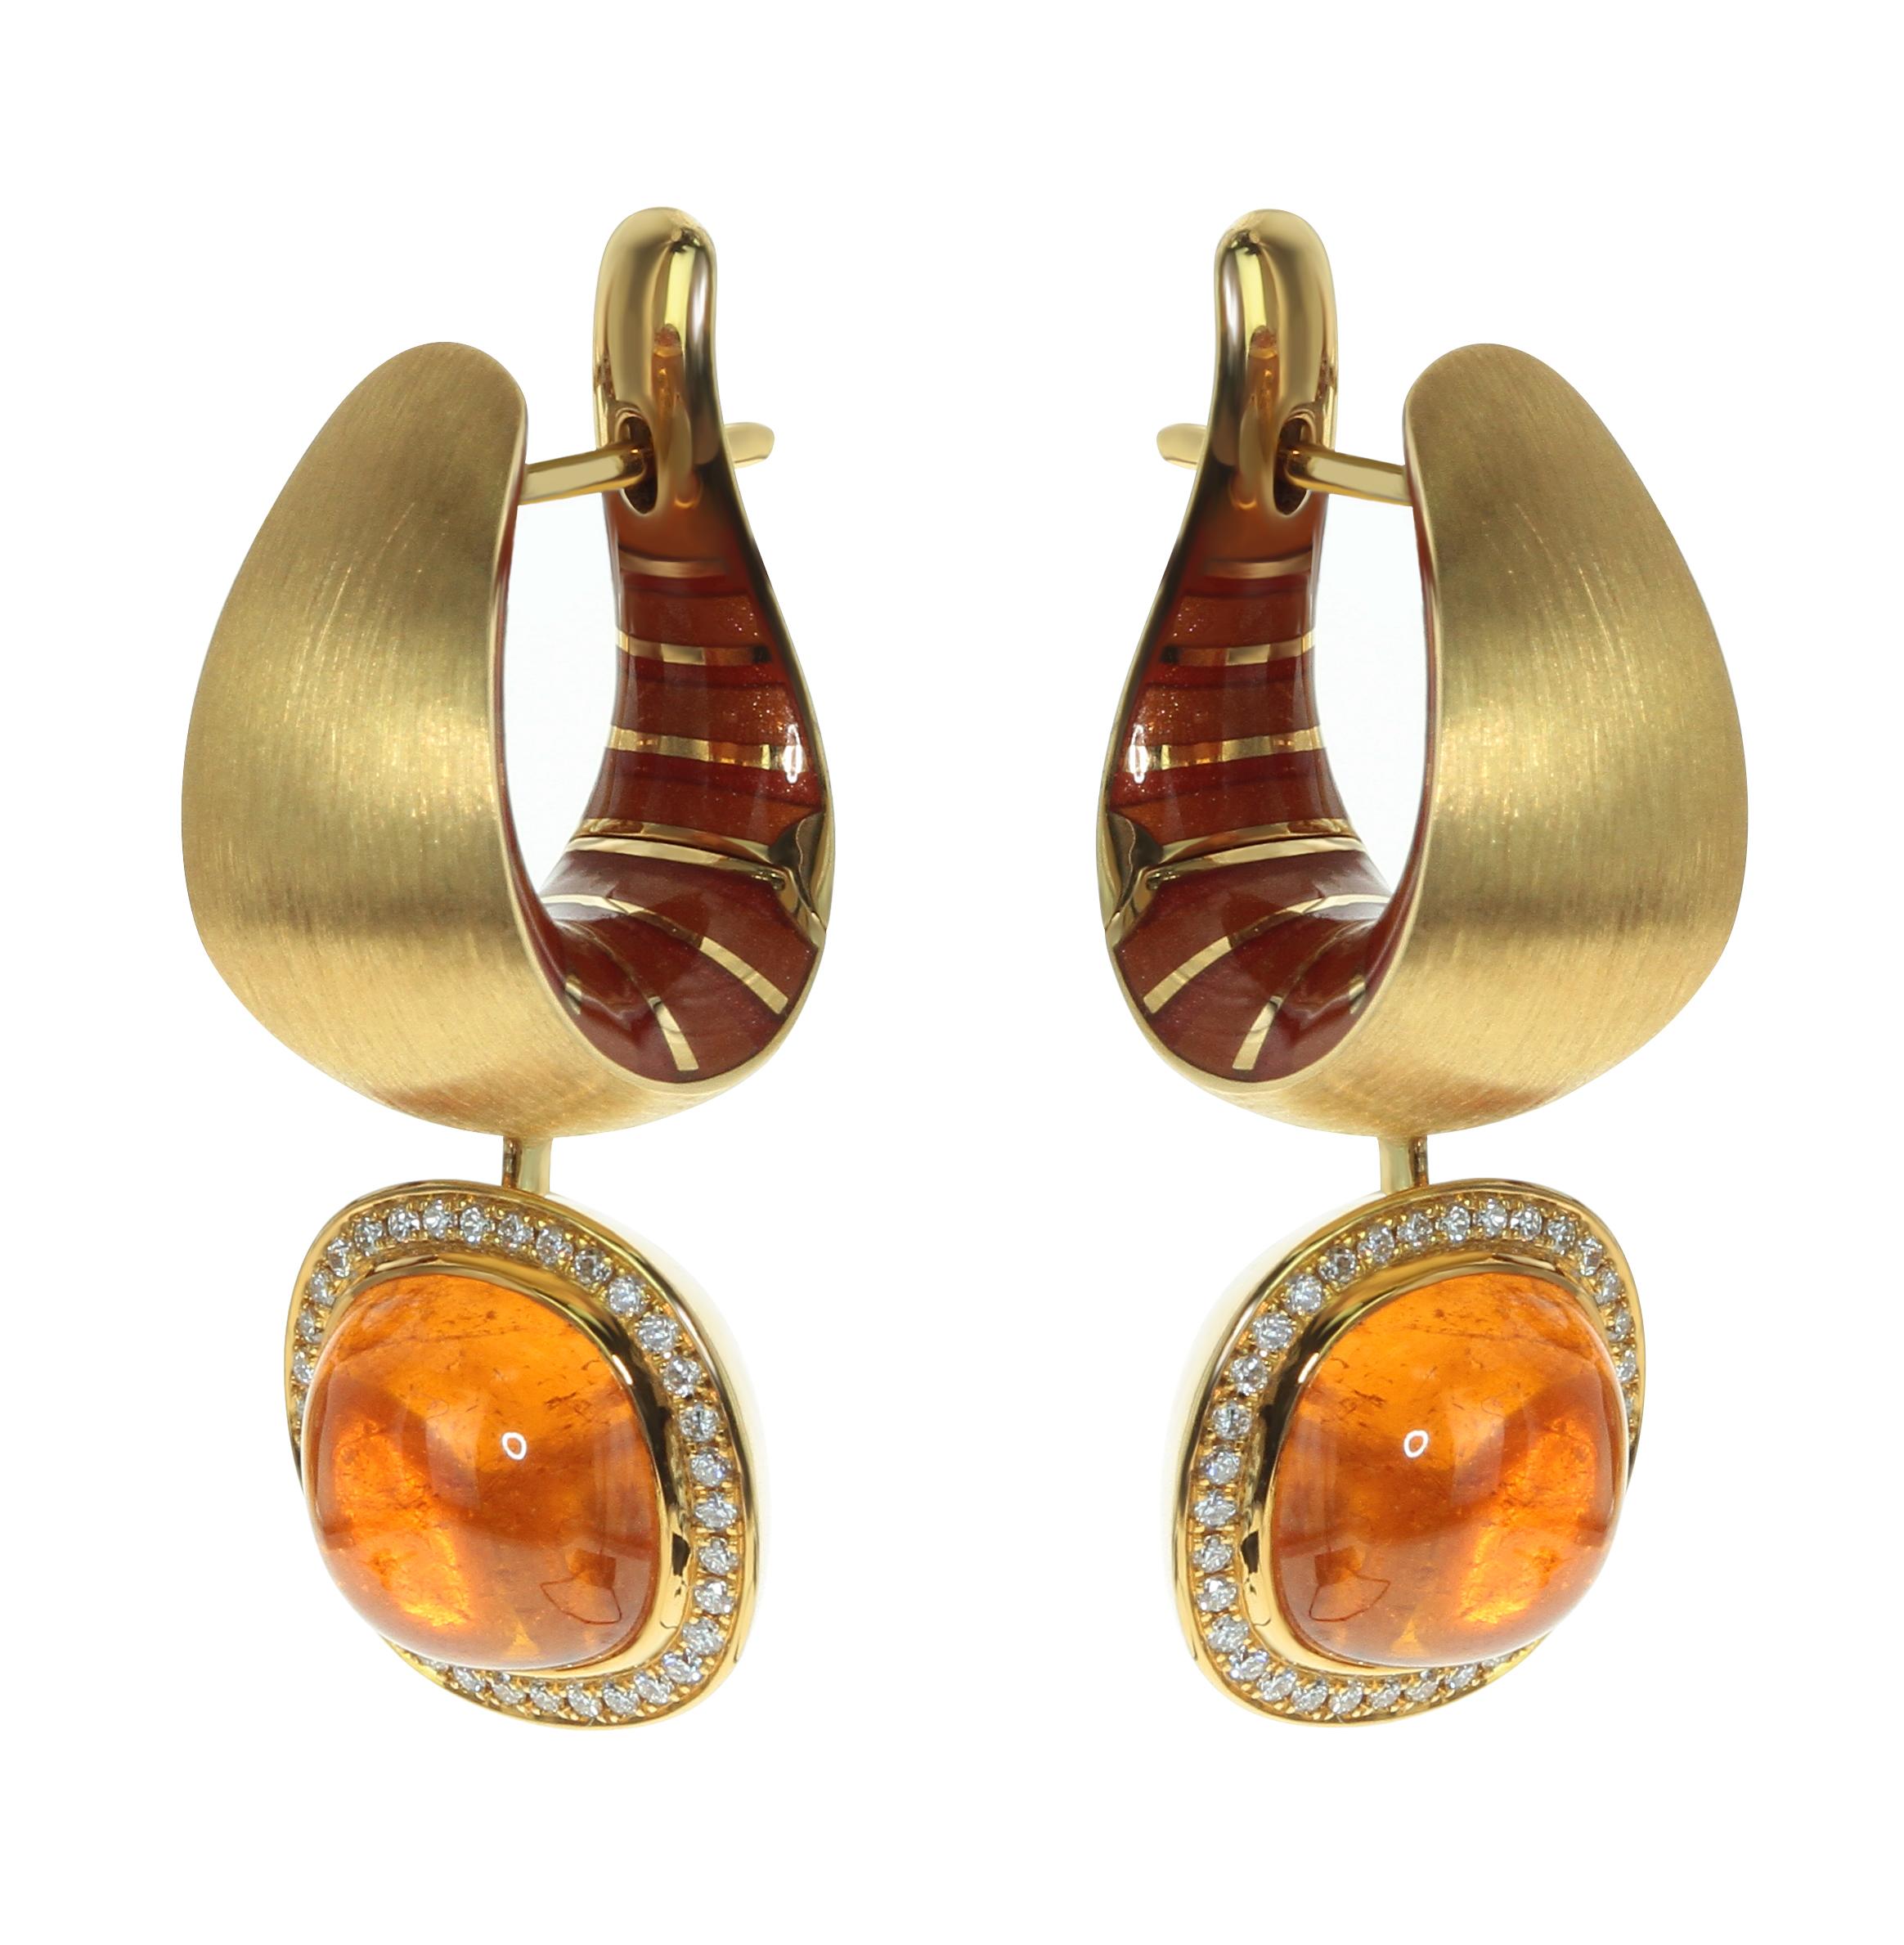 Diamant-Mandarin-Granat-Ohrringe aus 18 Karat Gelbgold mit Kaleidoskop-Emaille